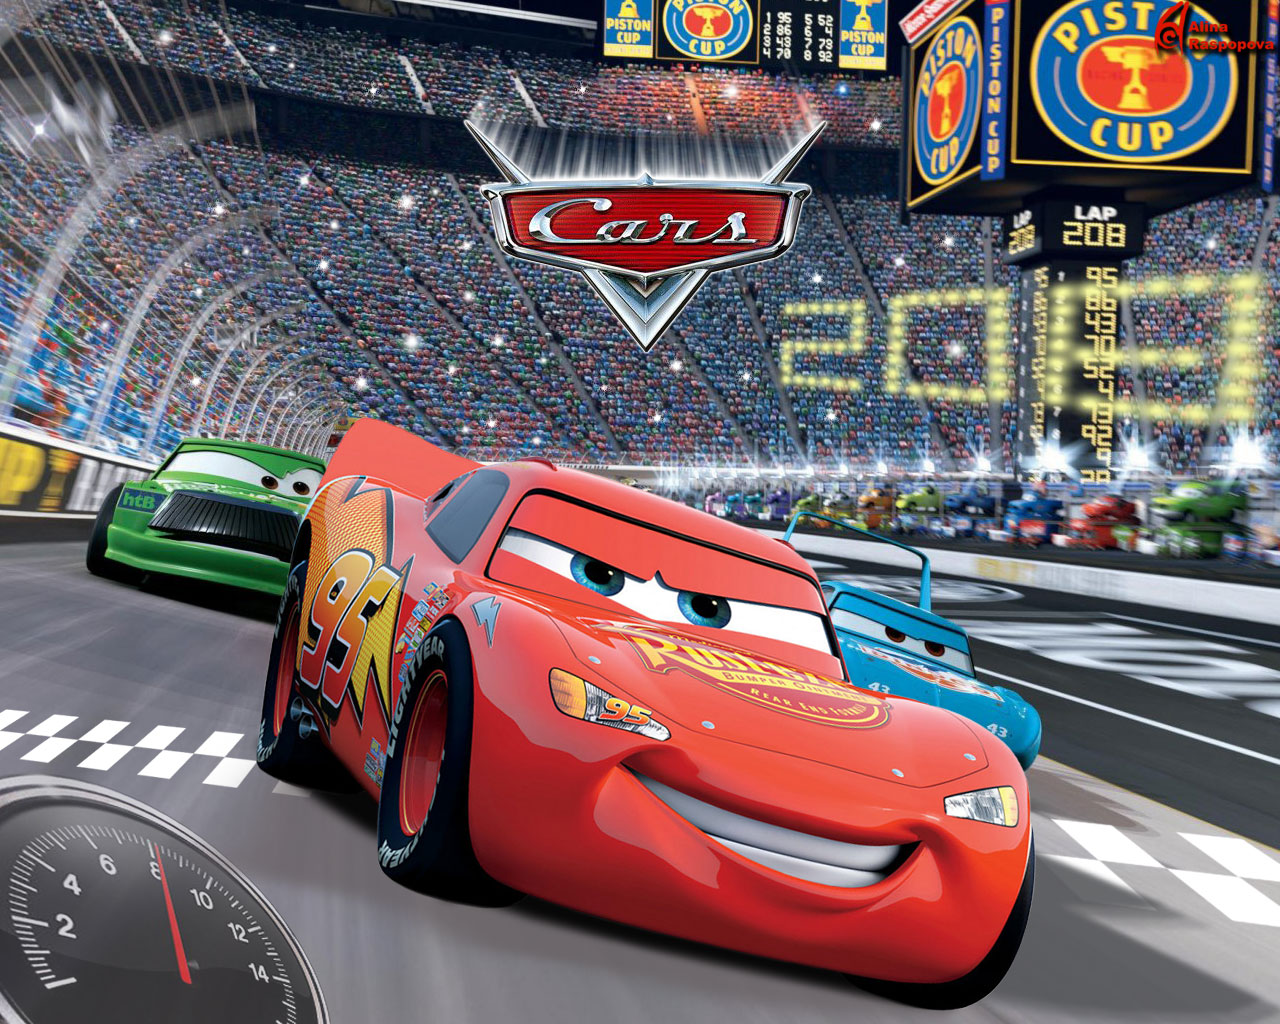 The Cars Movie Wallpaper for Top Desktop Top Desktop No1